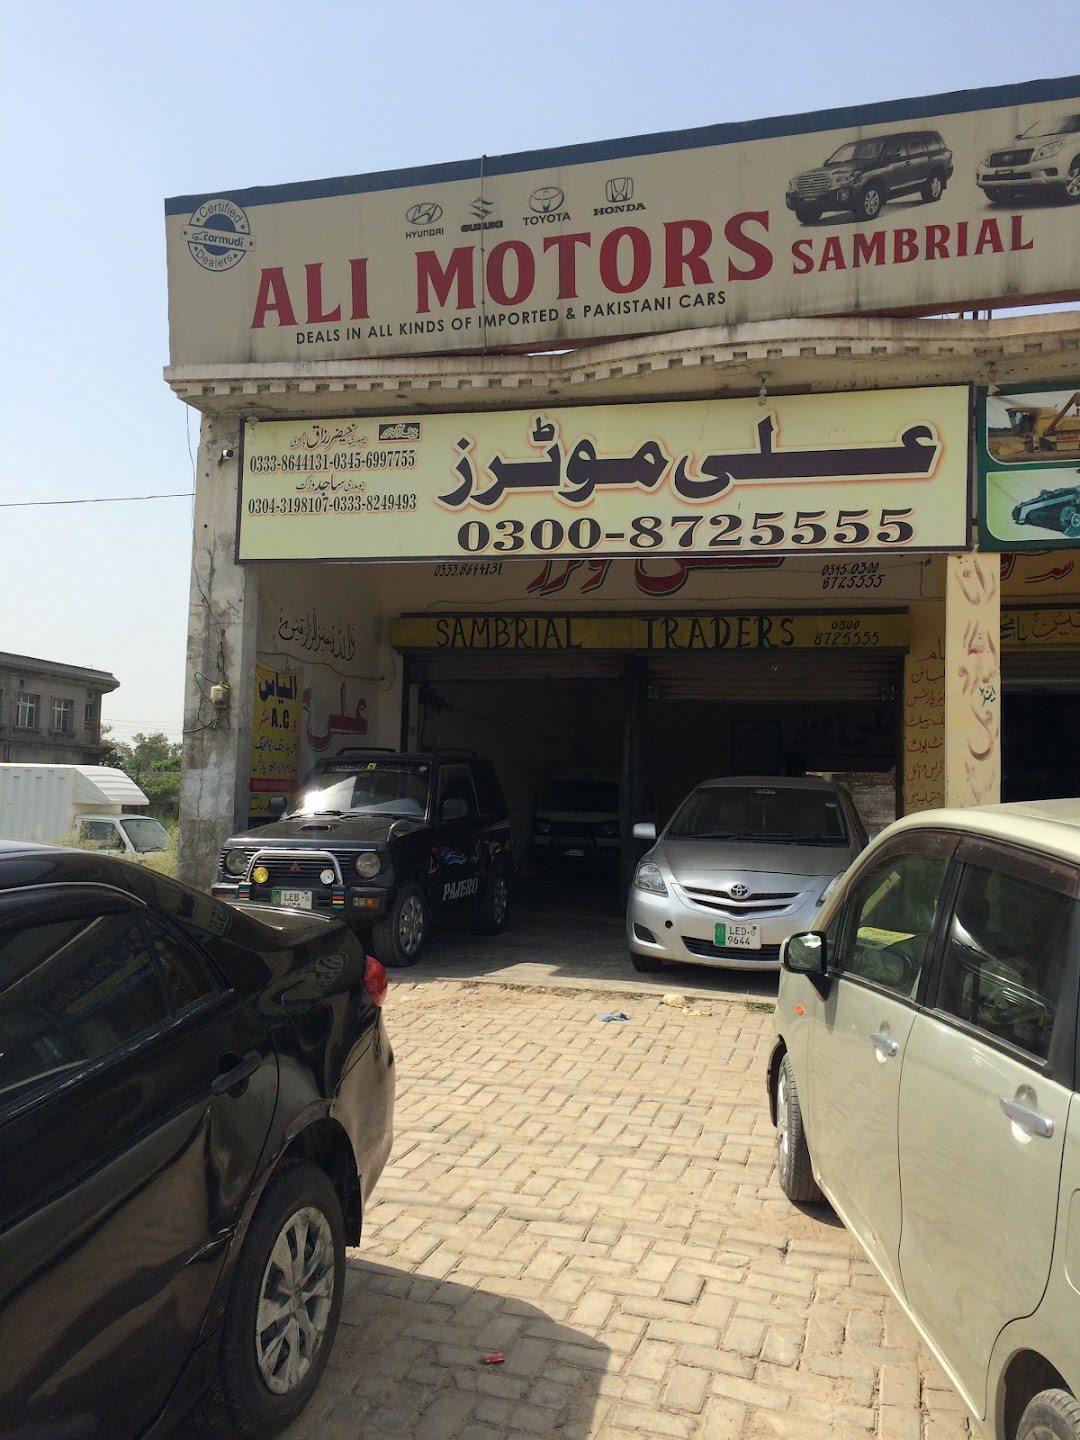 ALI Motors Sambrial